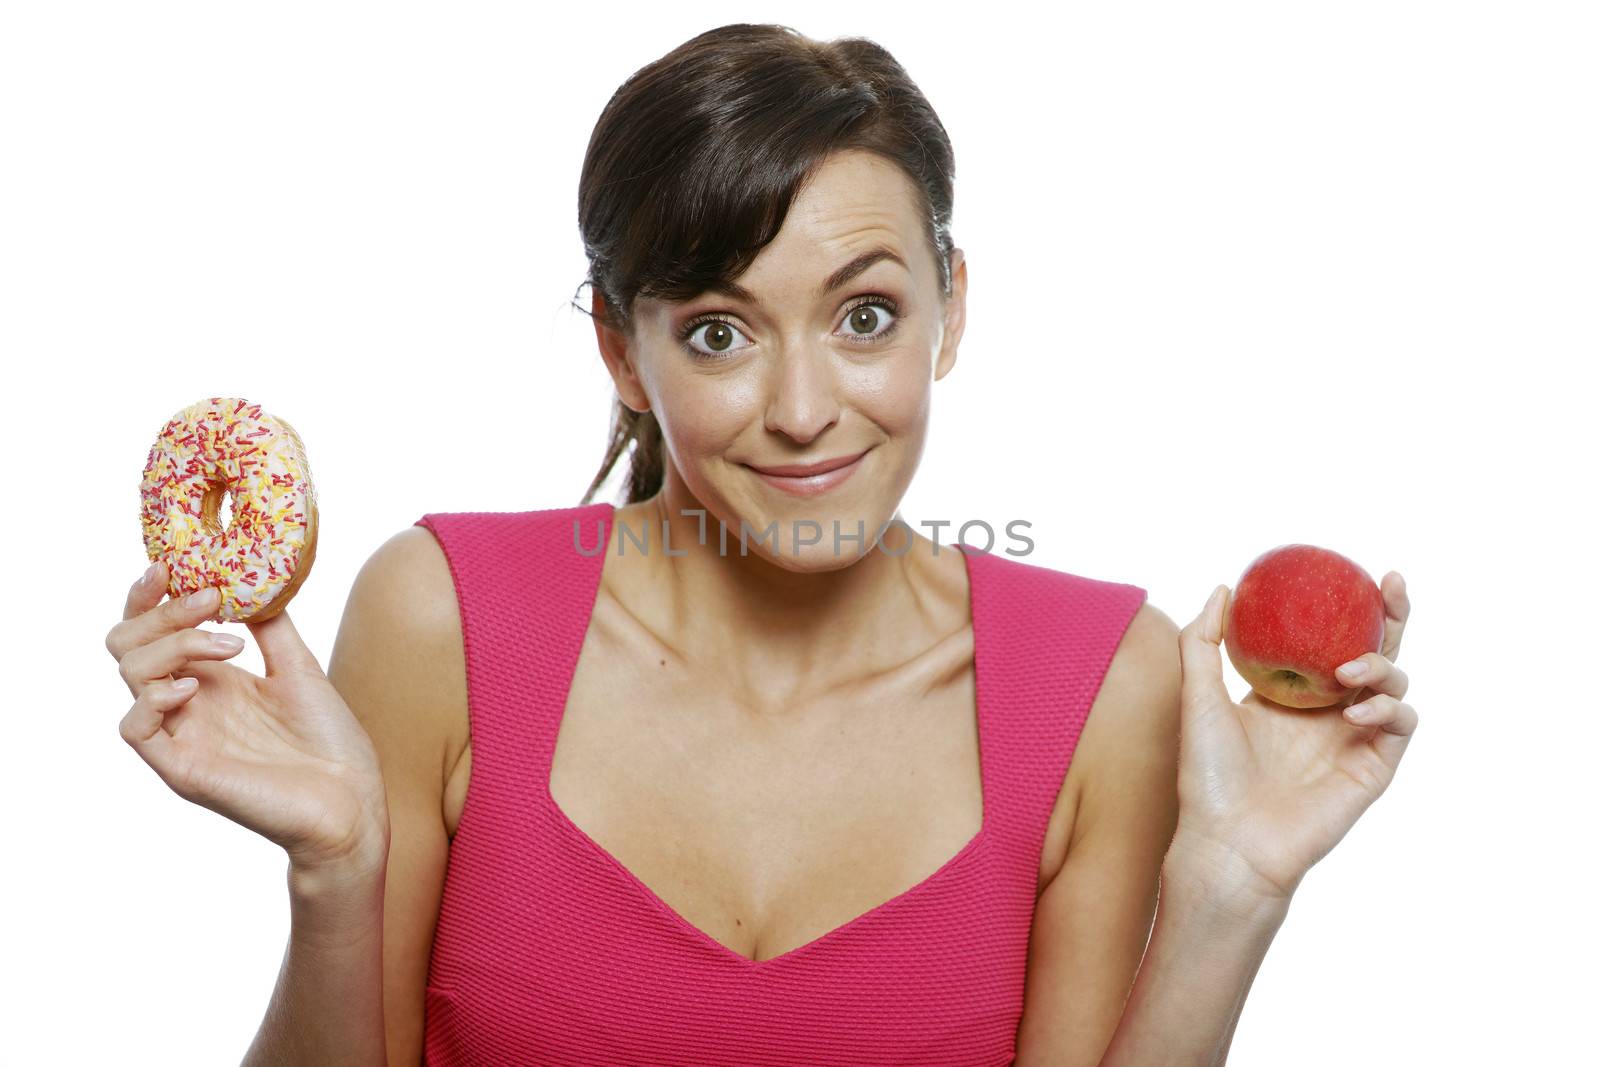 Young woman deciding between an apple or doughnut.